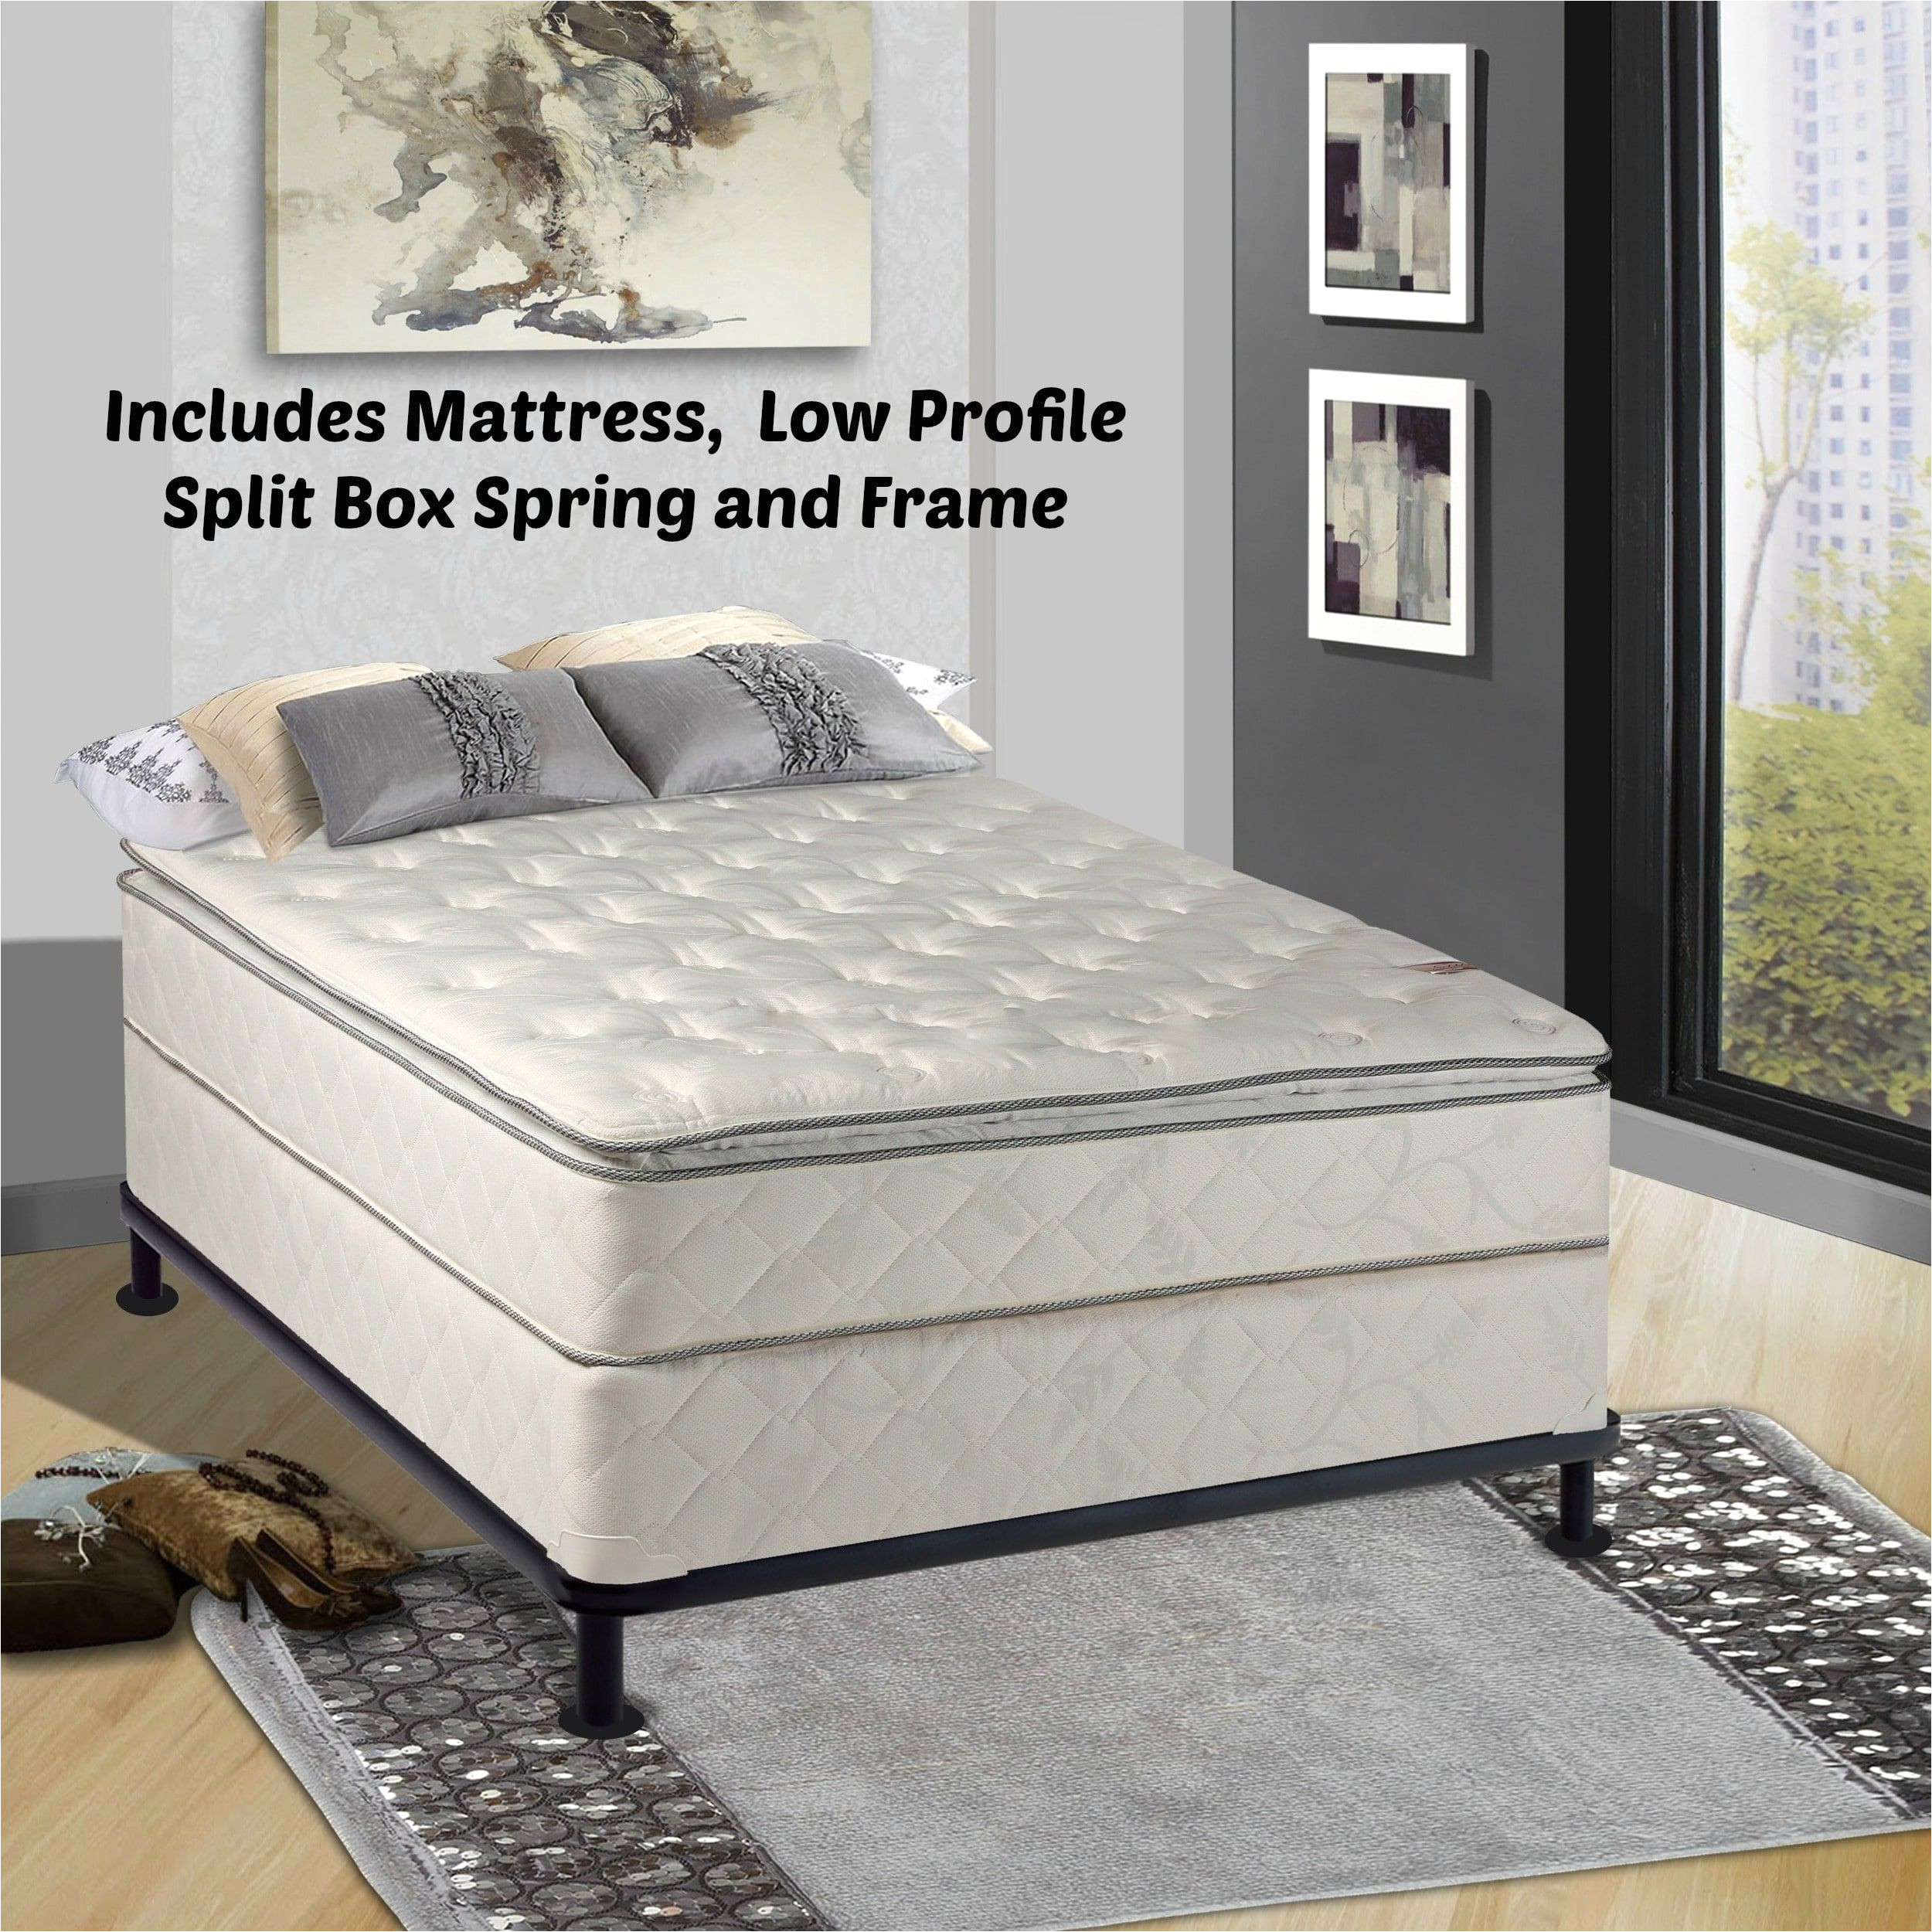 continental sleep medium plush pillowtop orthopedic type mattress and 5 inch semi flex box spring beige fabric